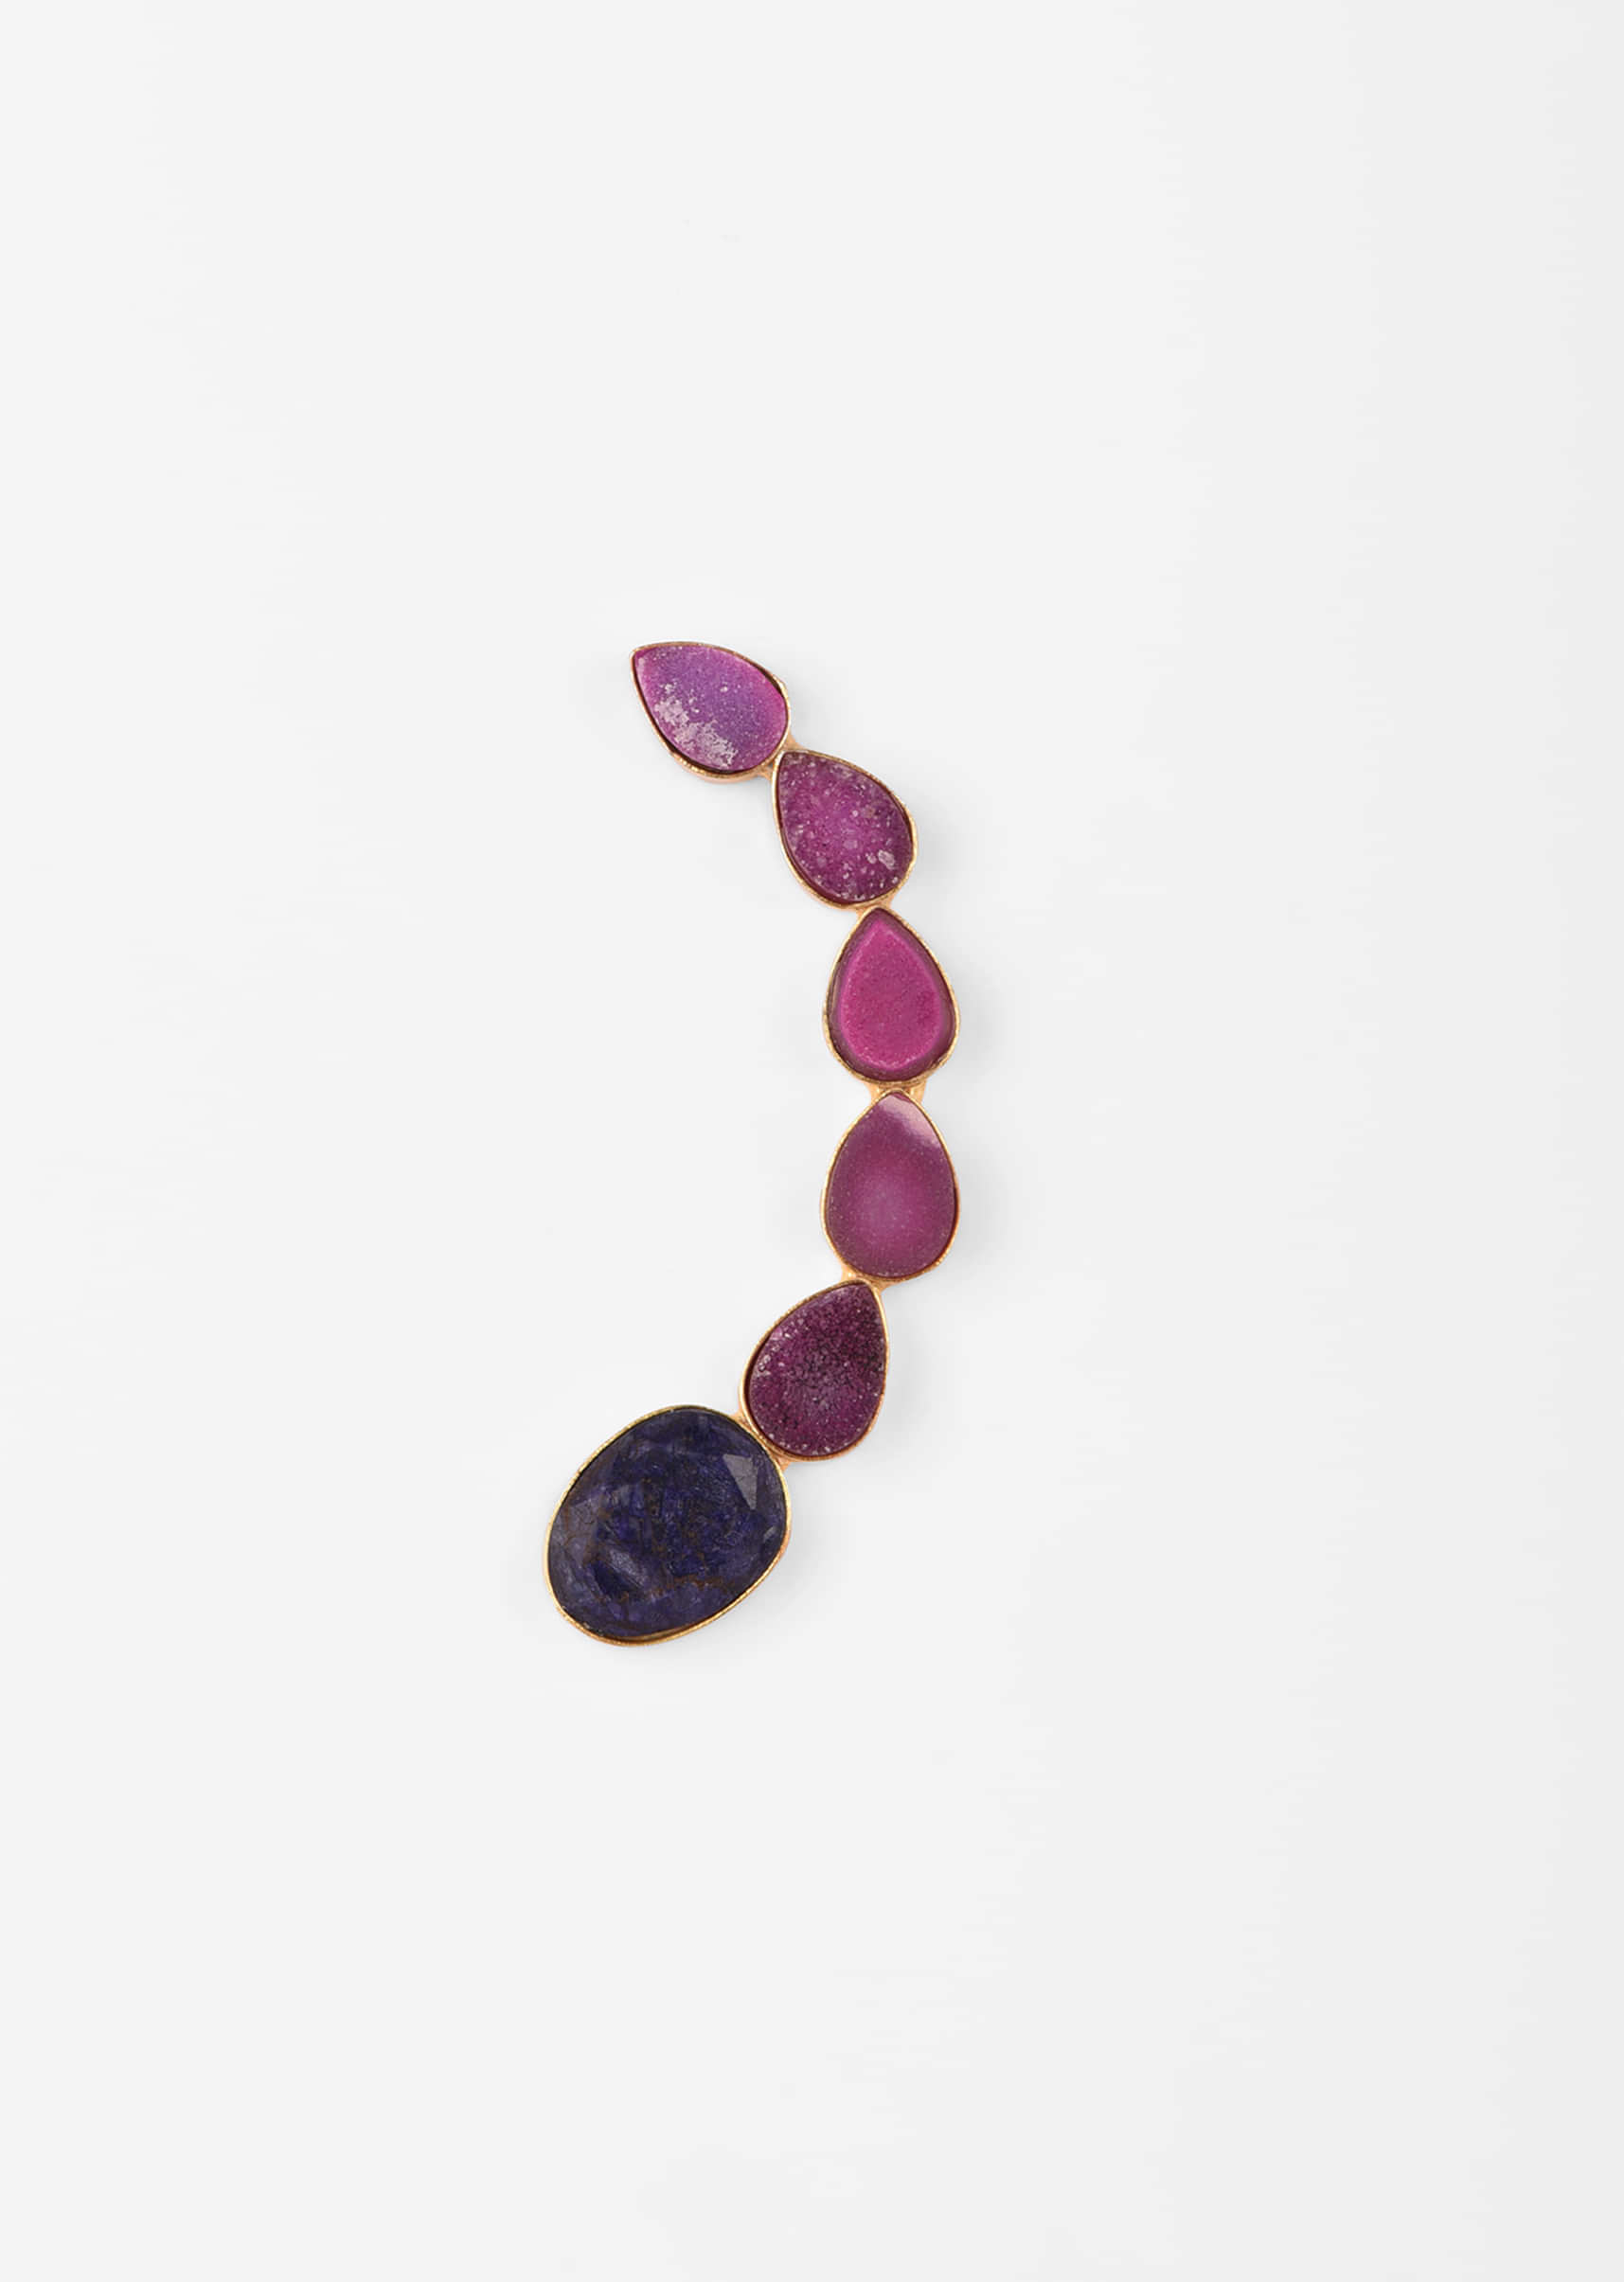 Amethyst Purple Semi Precious Stone Studded Earrings In A Crescent Shape 